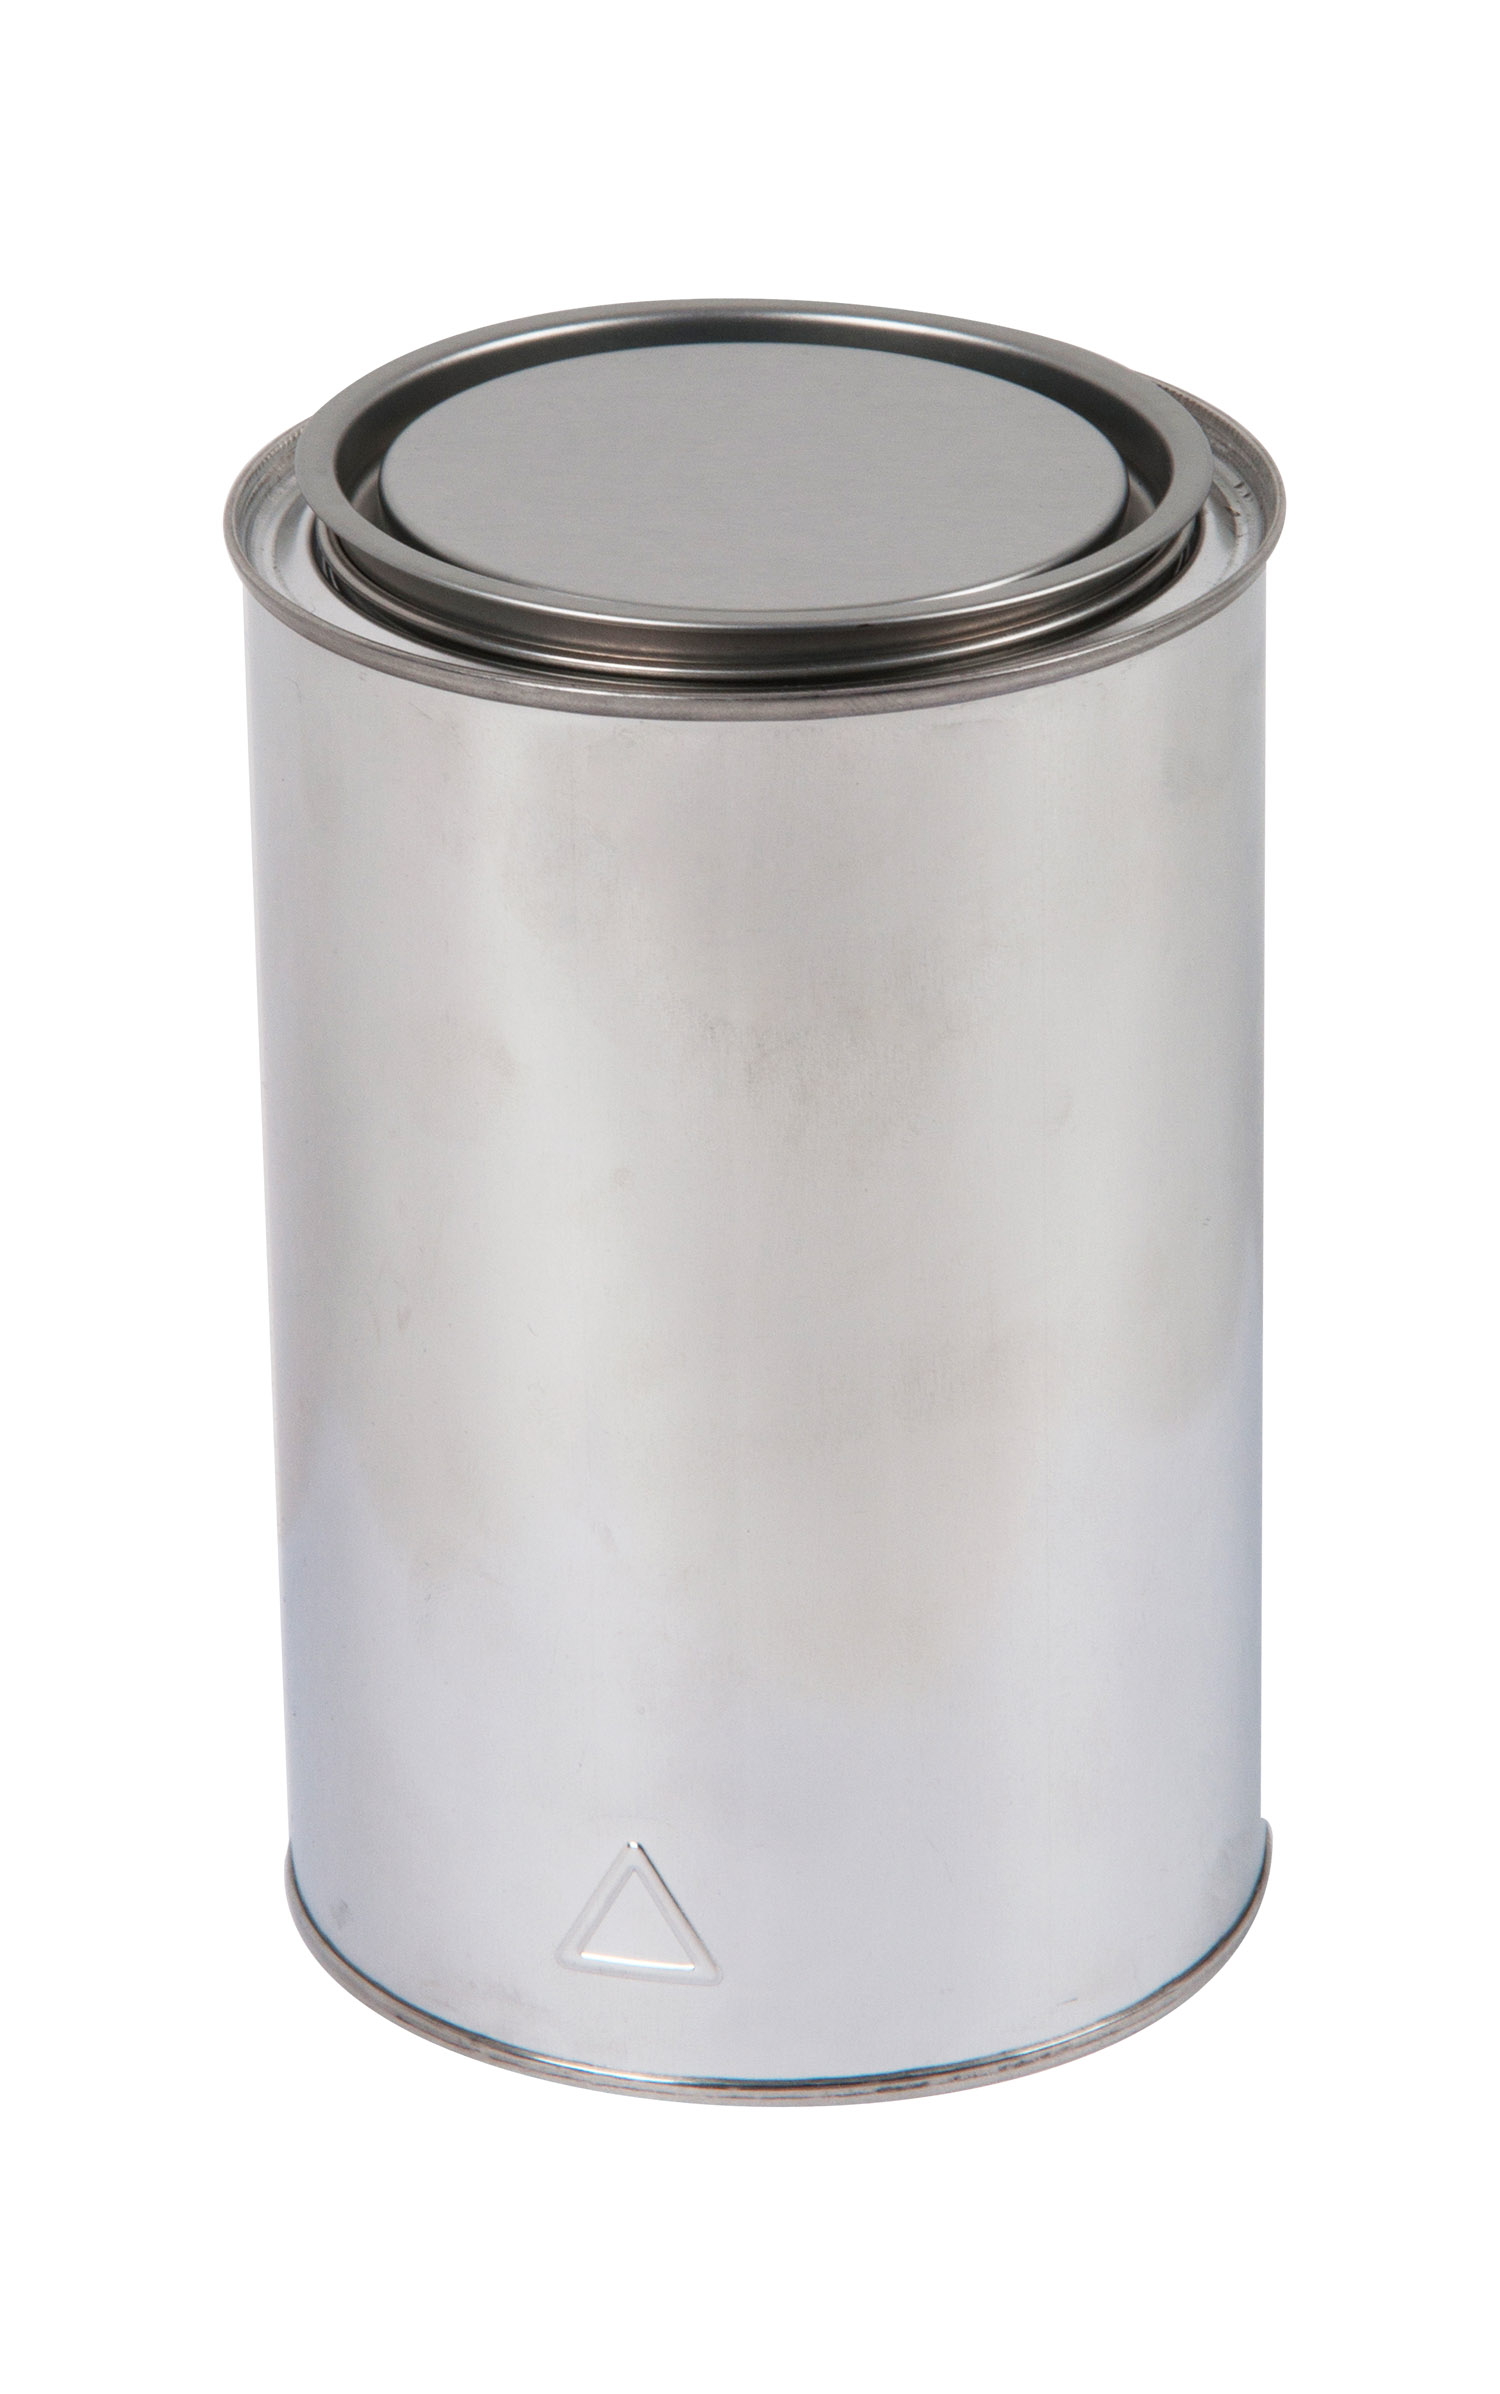 APP 250211 CAN - Blechdose Lackdose Leerdose für Lacke + Deckel 1,0 L | Büchse Dose Blech Lack Farbe